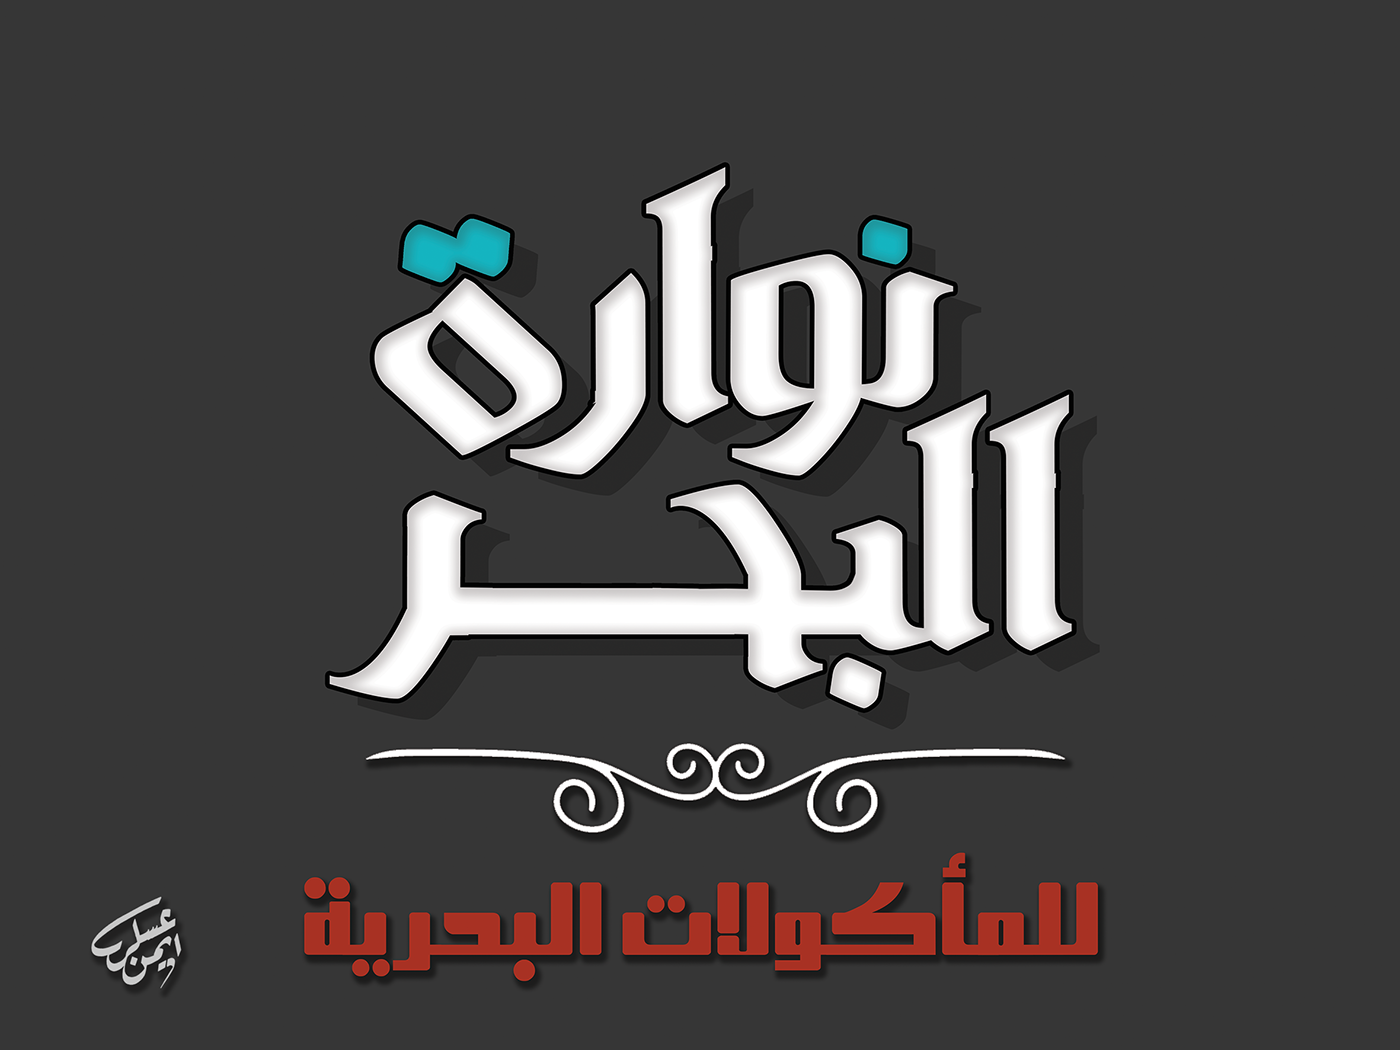 #arabic type #typography #ayman #askar #advertising #prints